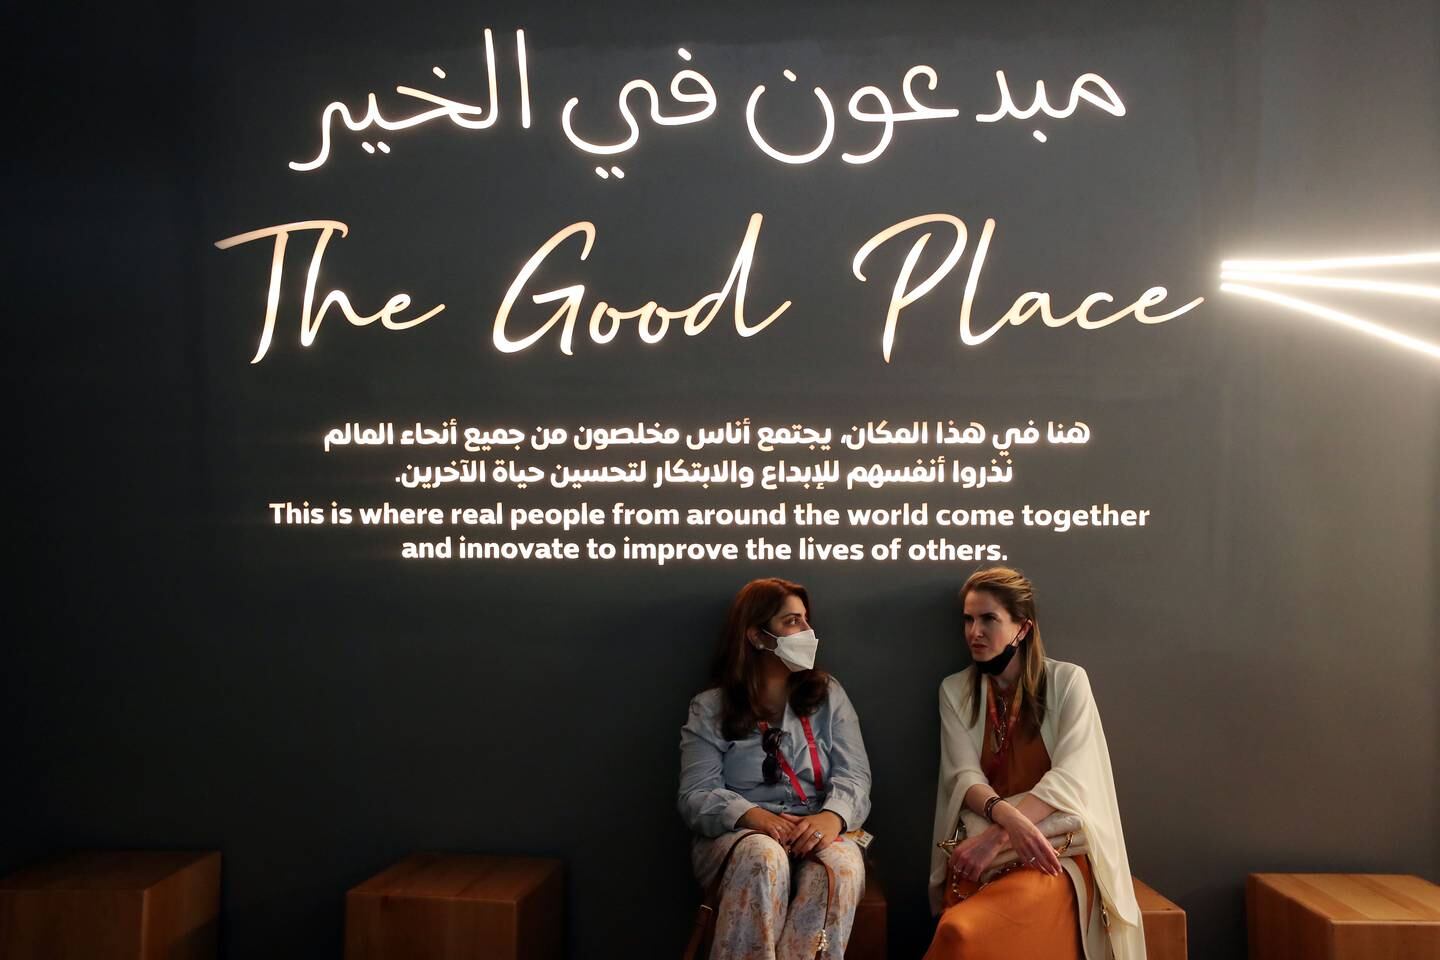 The Good Place Pavilion by Expo Live. Expo 2020, Dubai